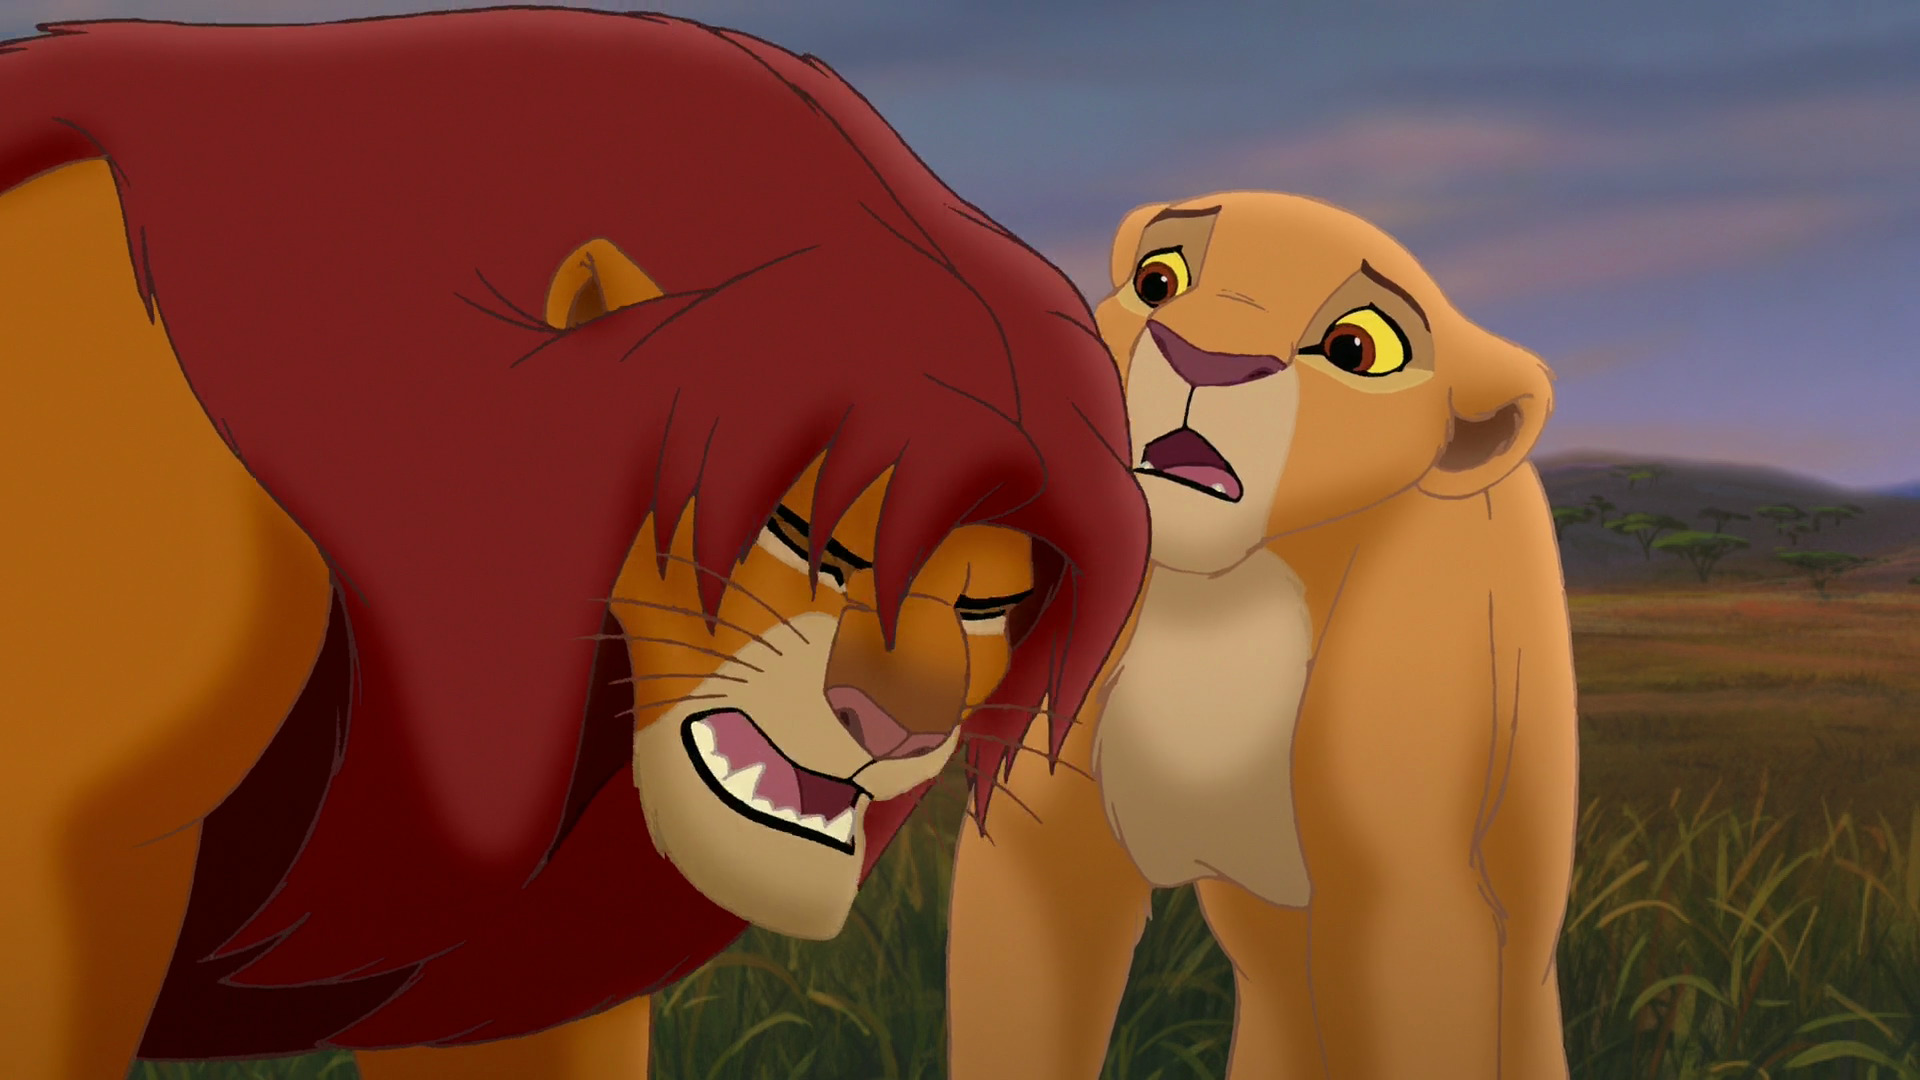 the lion king 2 kiara and simba